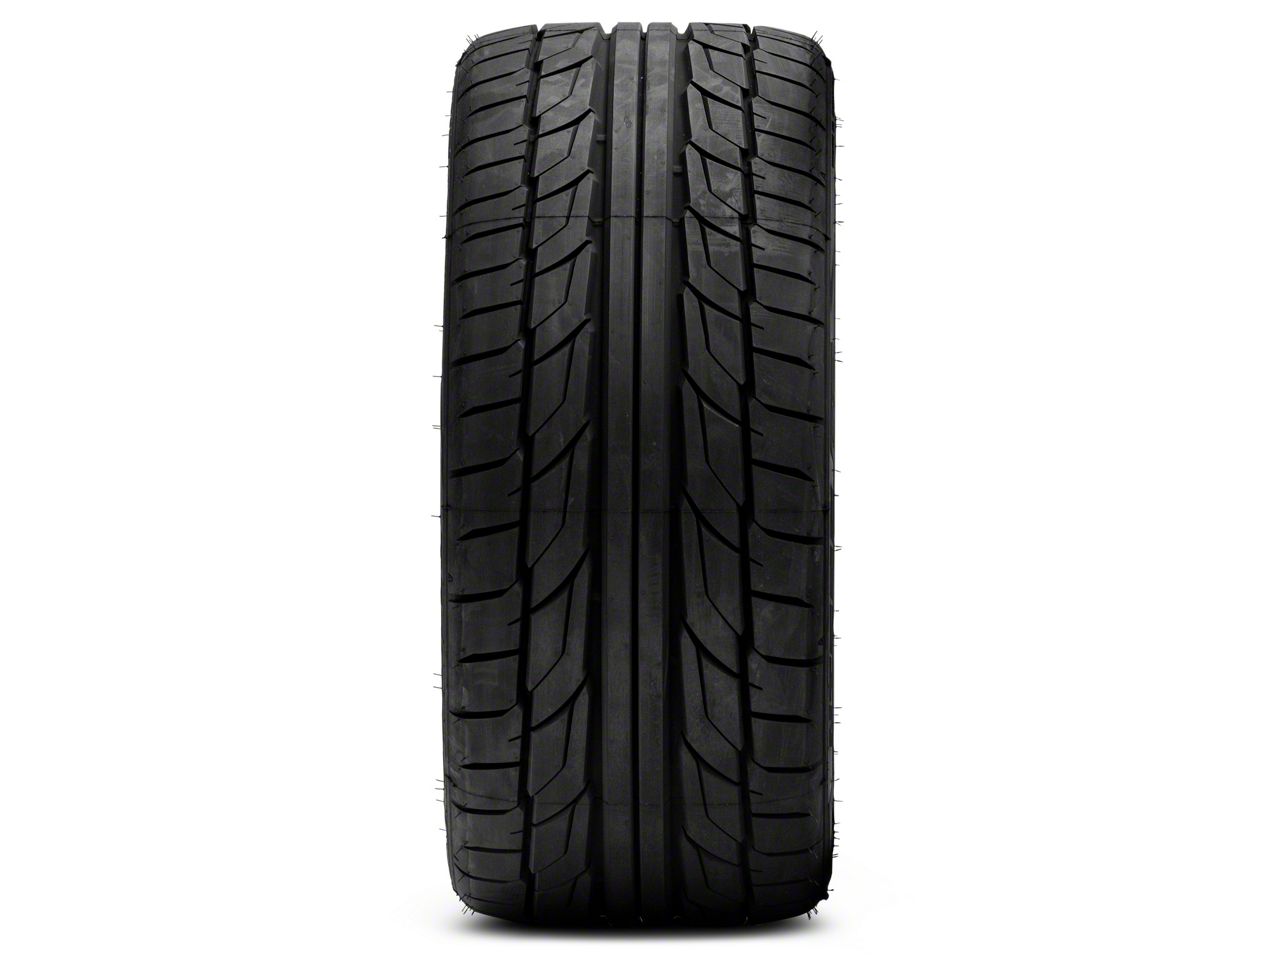 NITTO NT555 G2 Summer Ultra High Performance Tire (305/35R19)